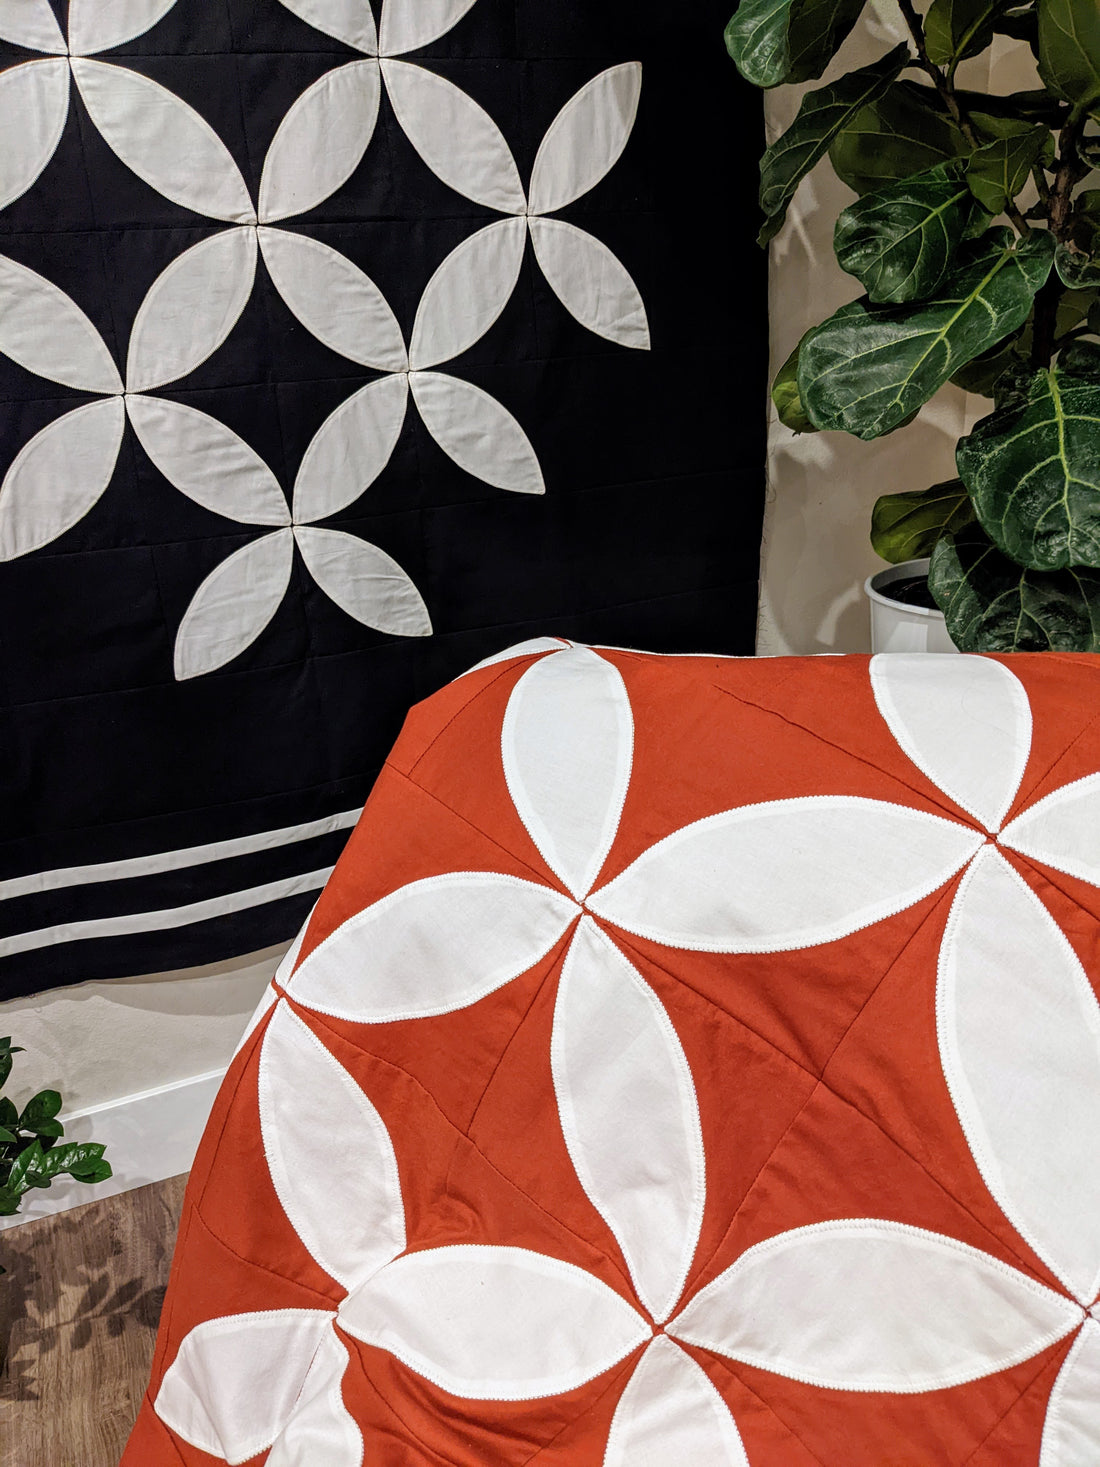 Introducing the Willow Rose Quilt Pattern - An elegant modern appliqué quilt pattern